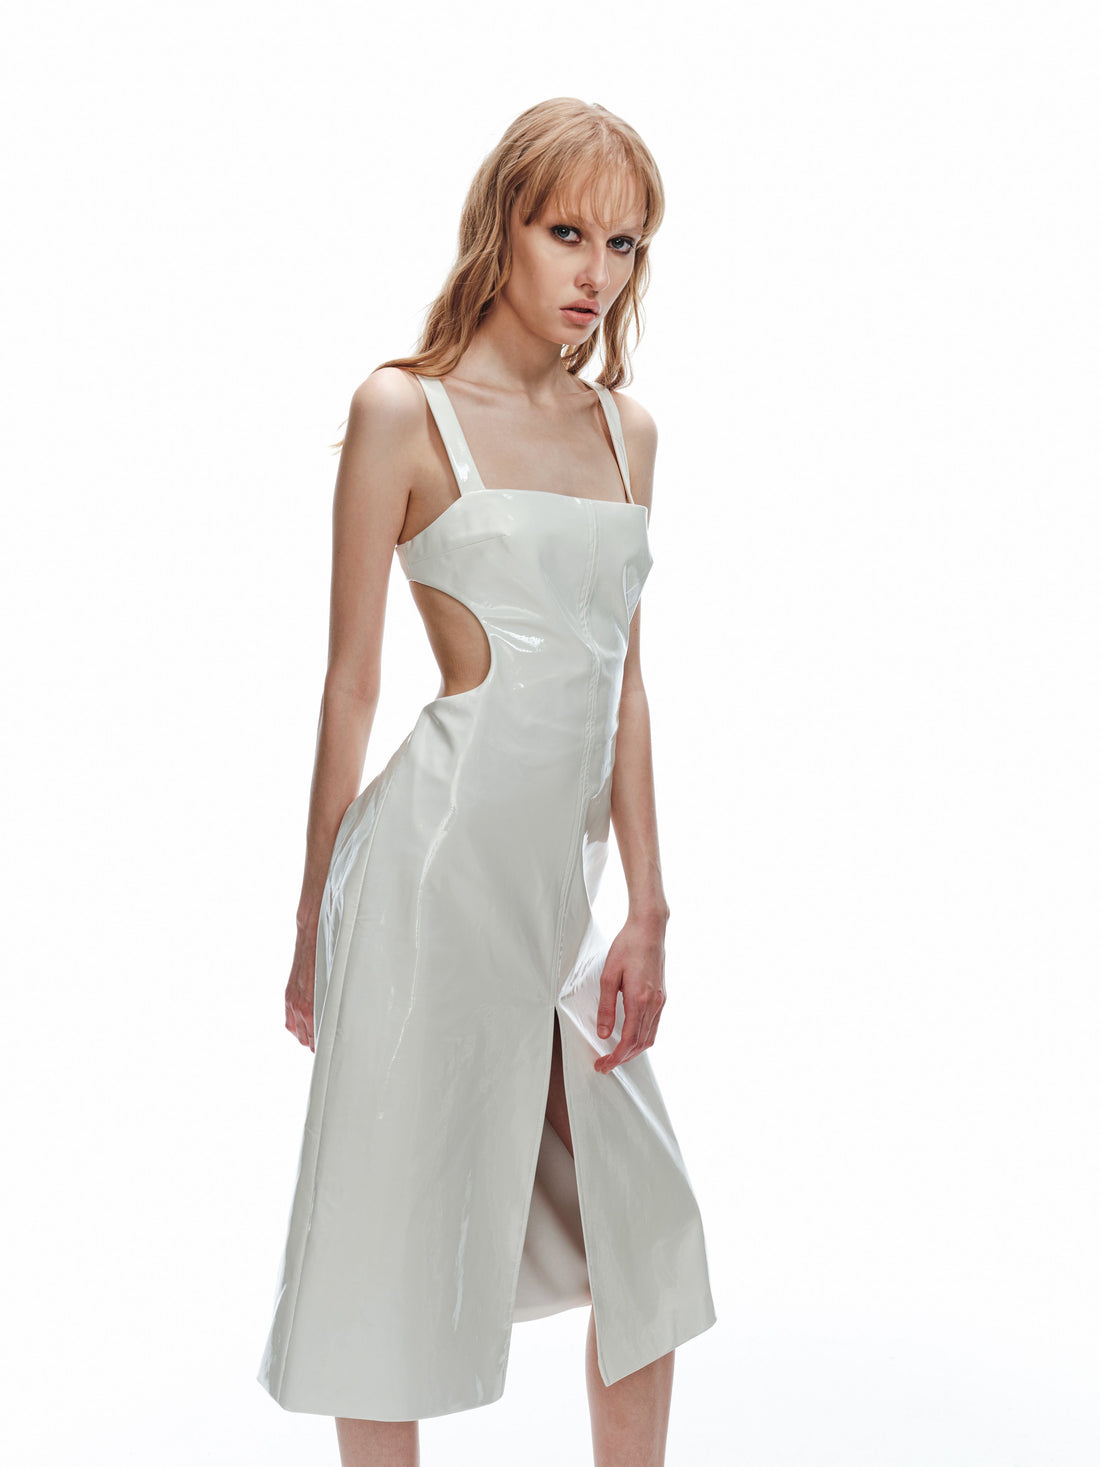 GISELLE WHITE IVORY DRESS